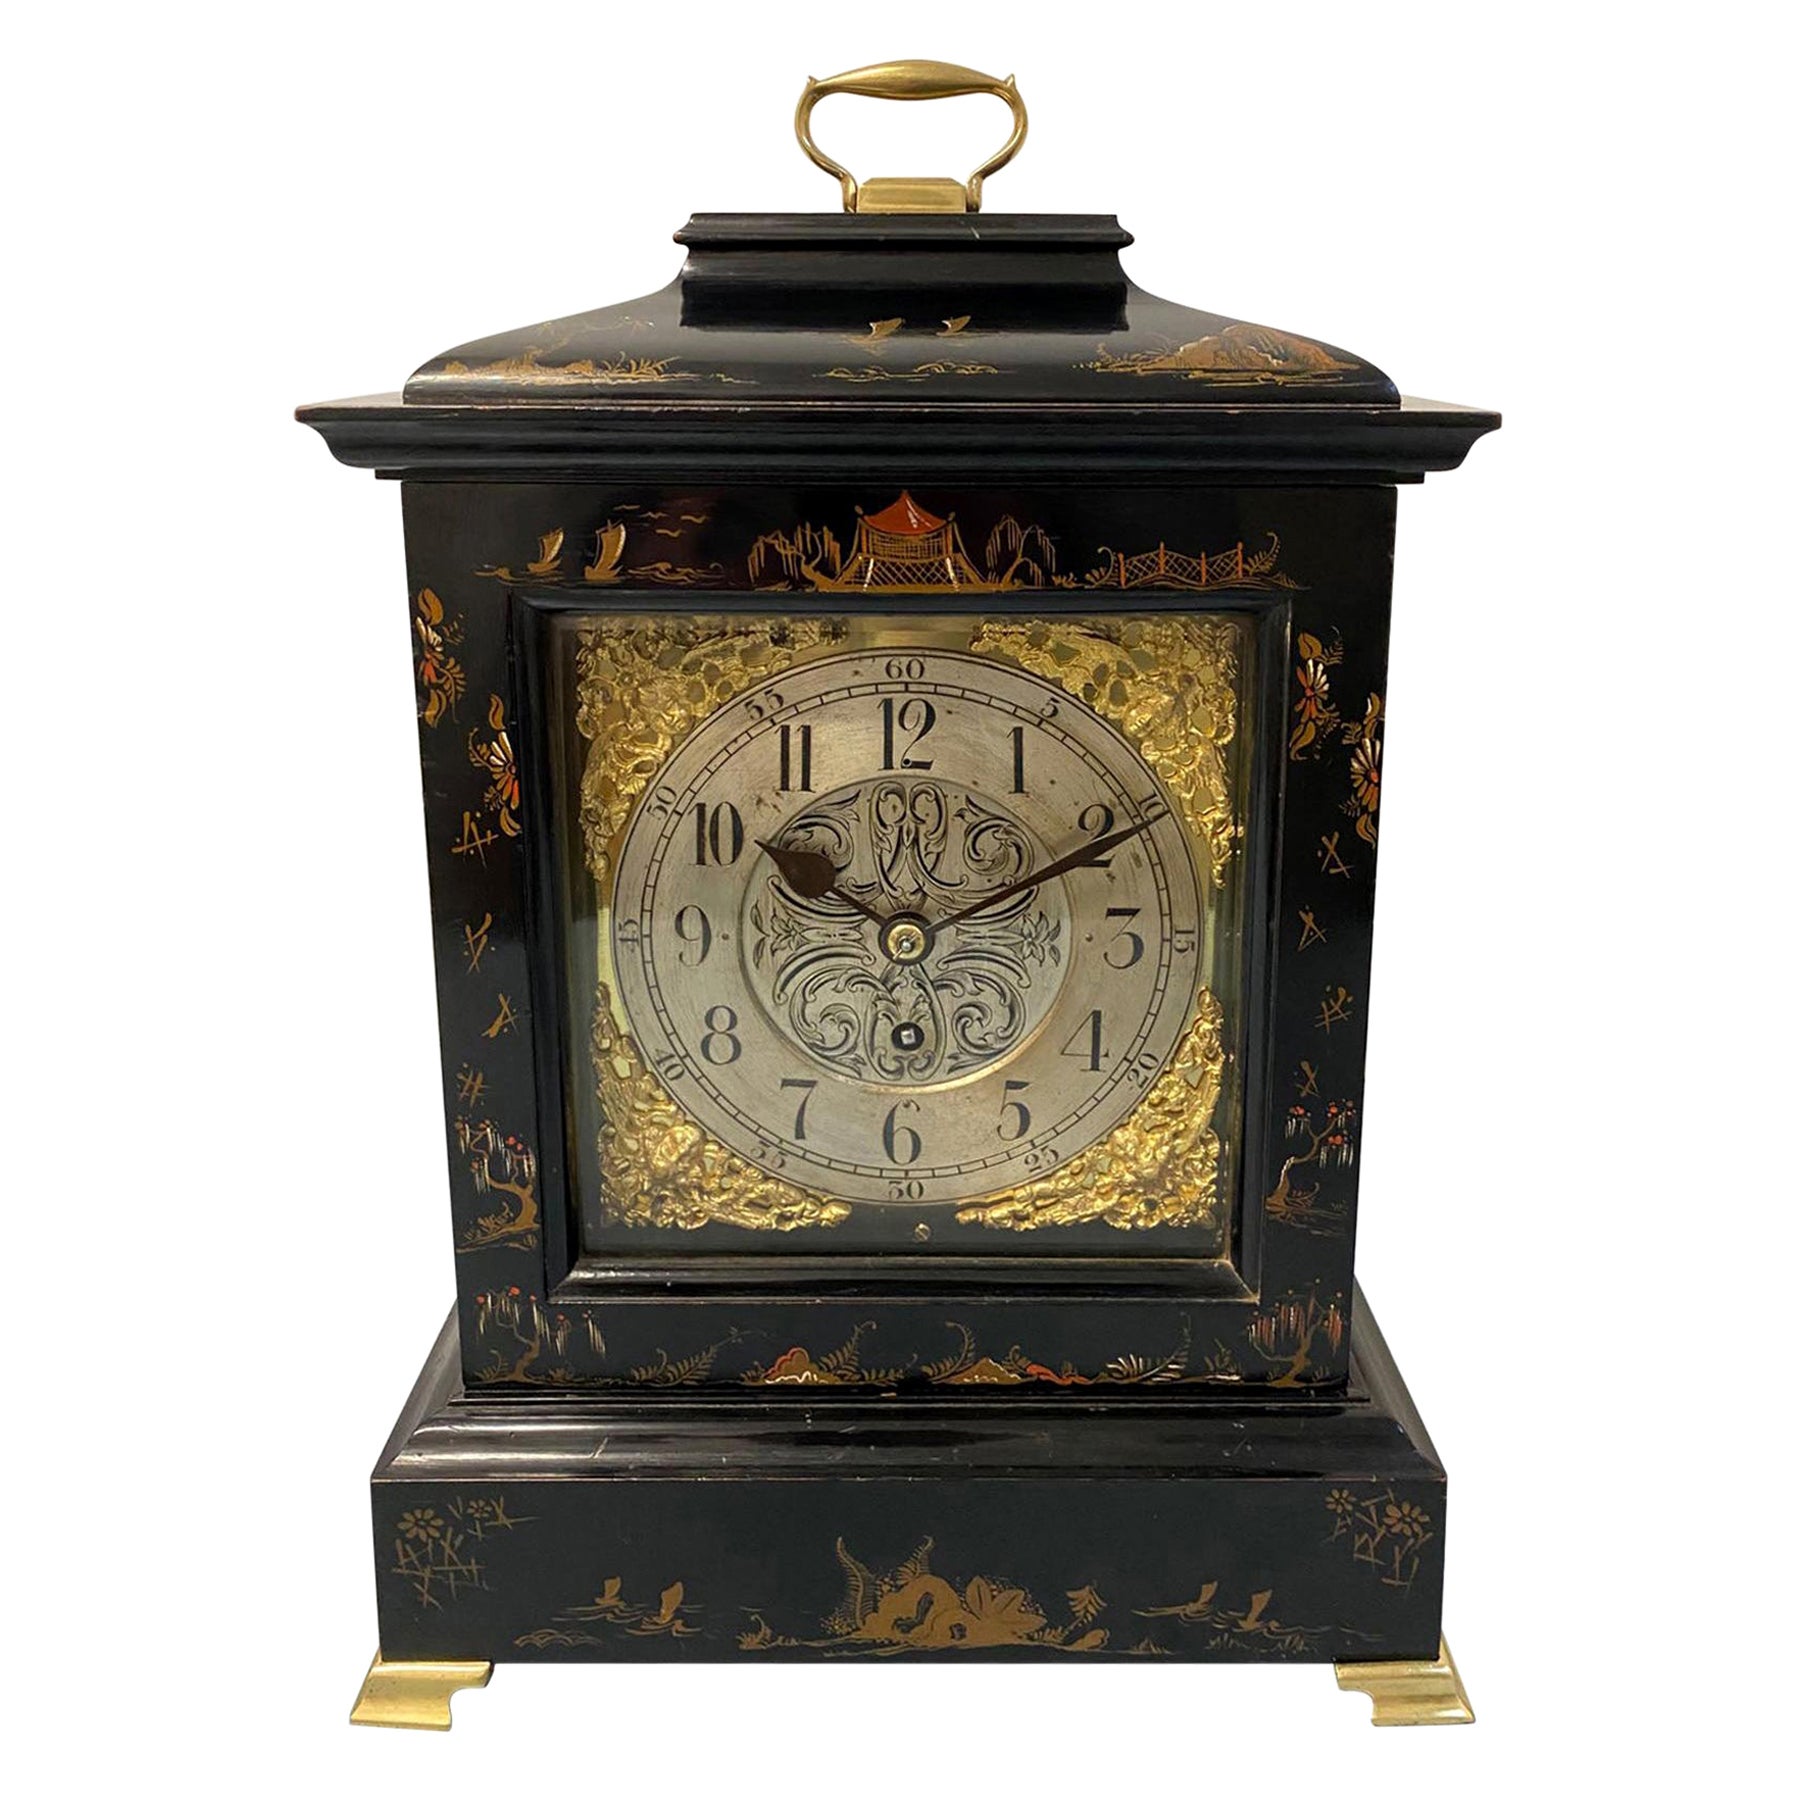 Horloge à support de style chinoiserie noire anglaise, Mouvement Fusee, vers 1880